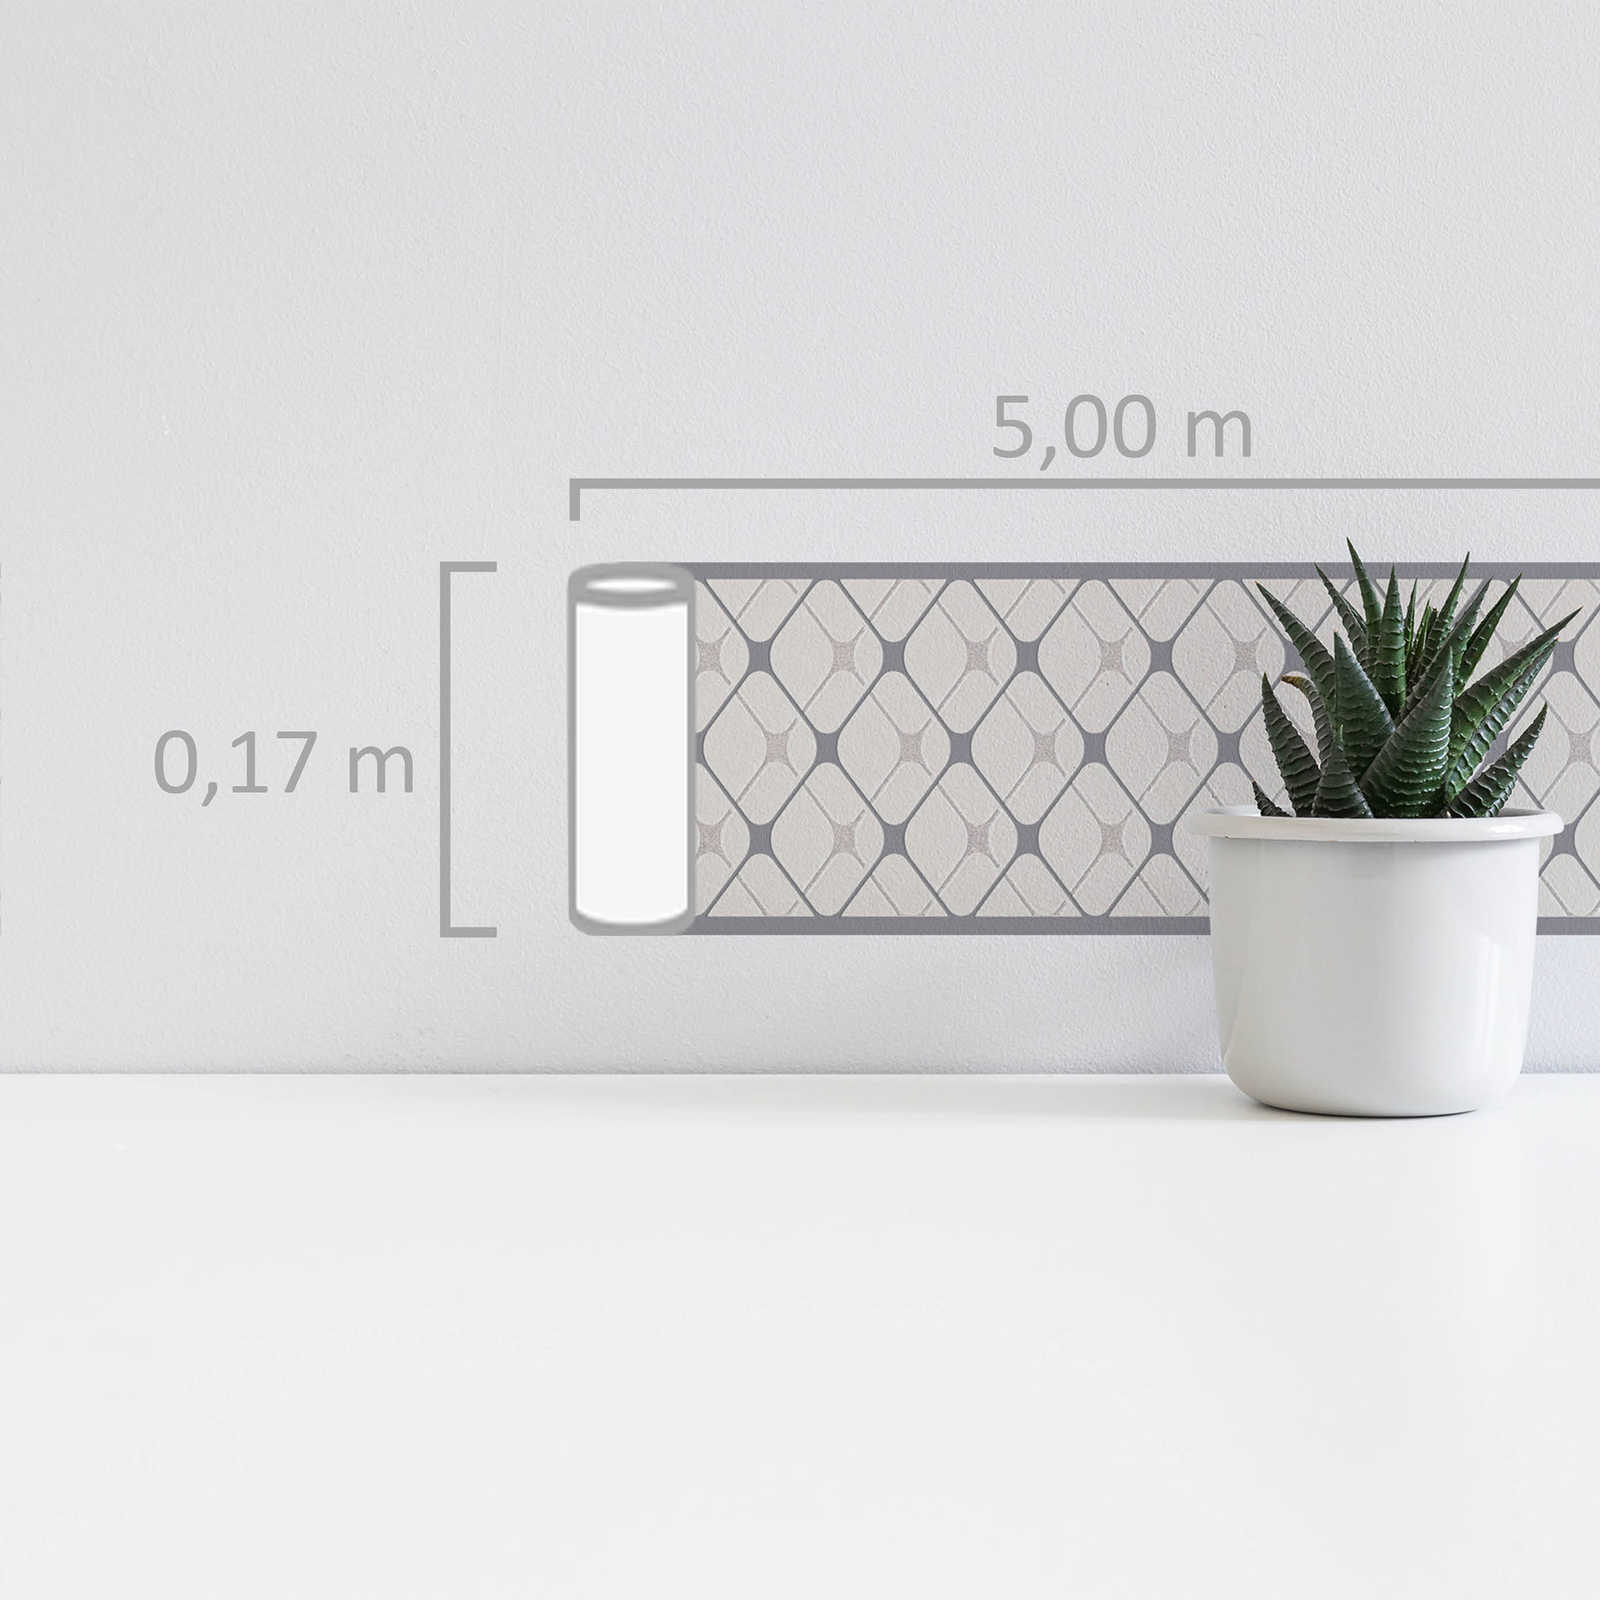             Self-adhesive wallpaper border with diamond pattern - grey, white
        